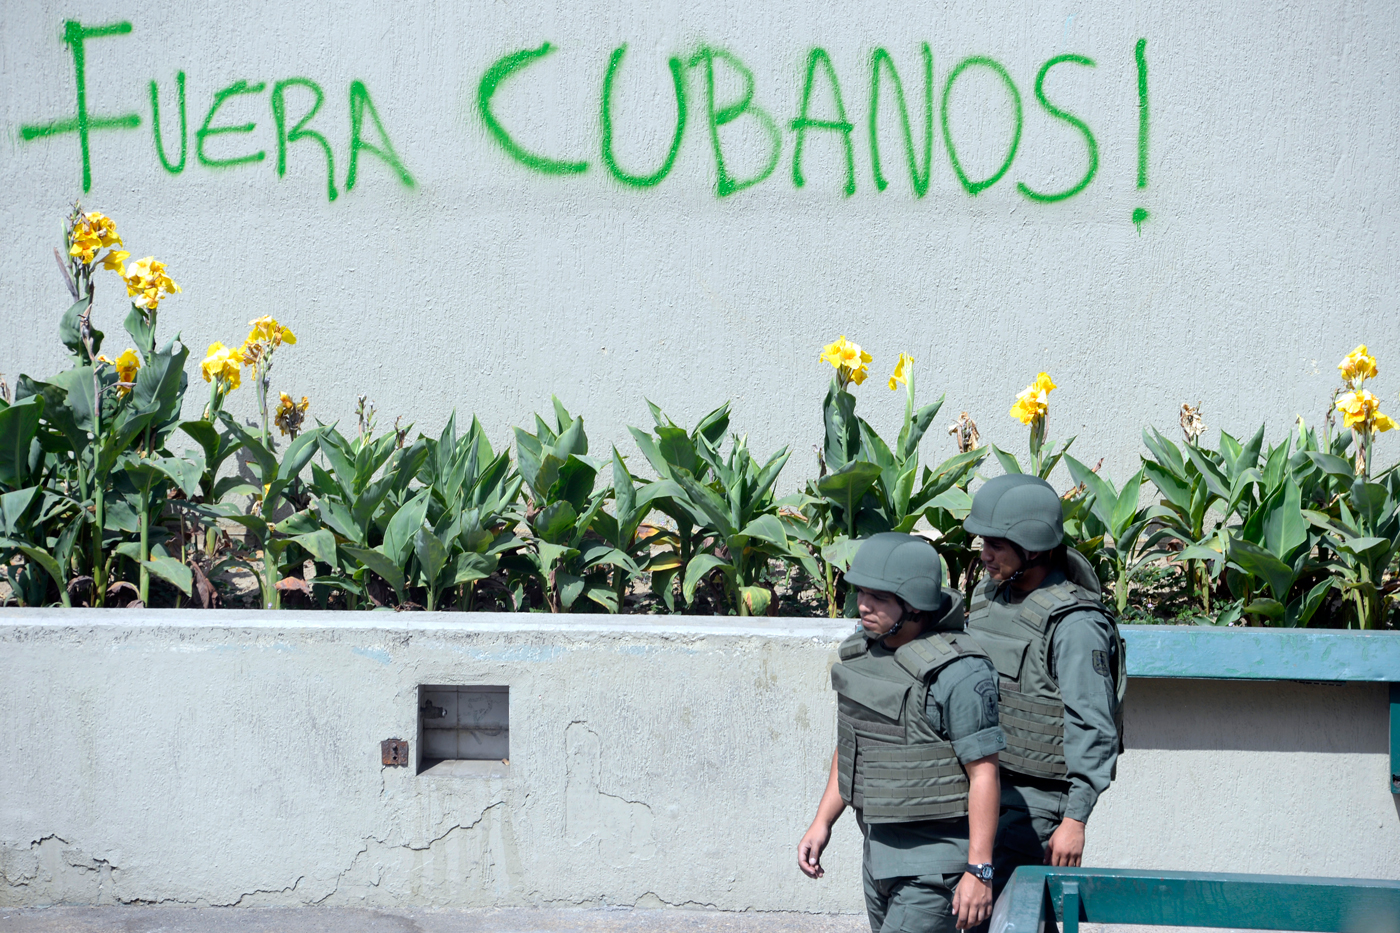 Frente Institucional Militar denuncia fuerte presencia de militares cubanos en Venezuela (Comunicado)